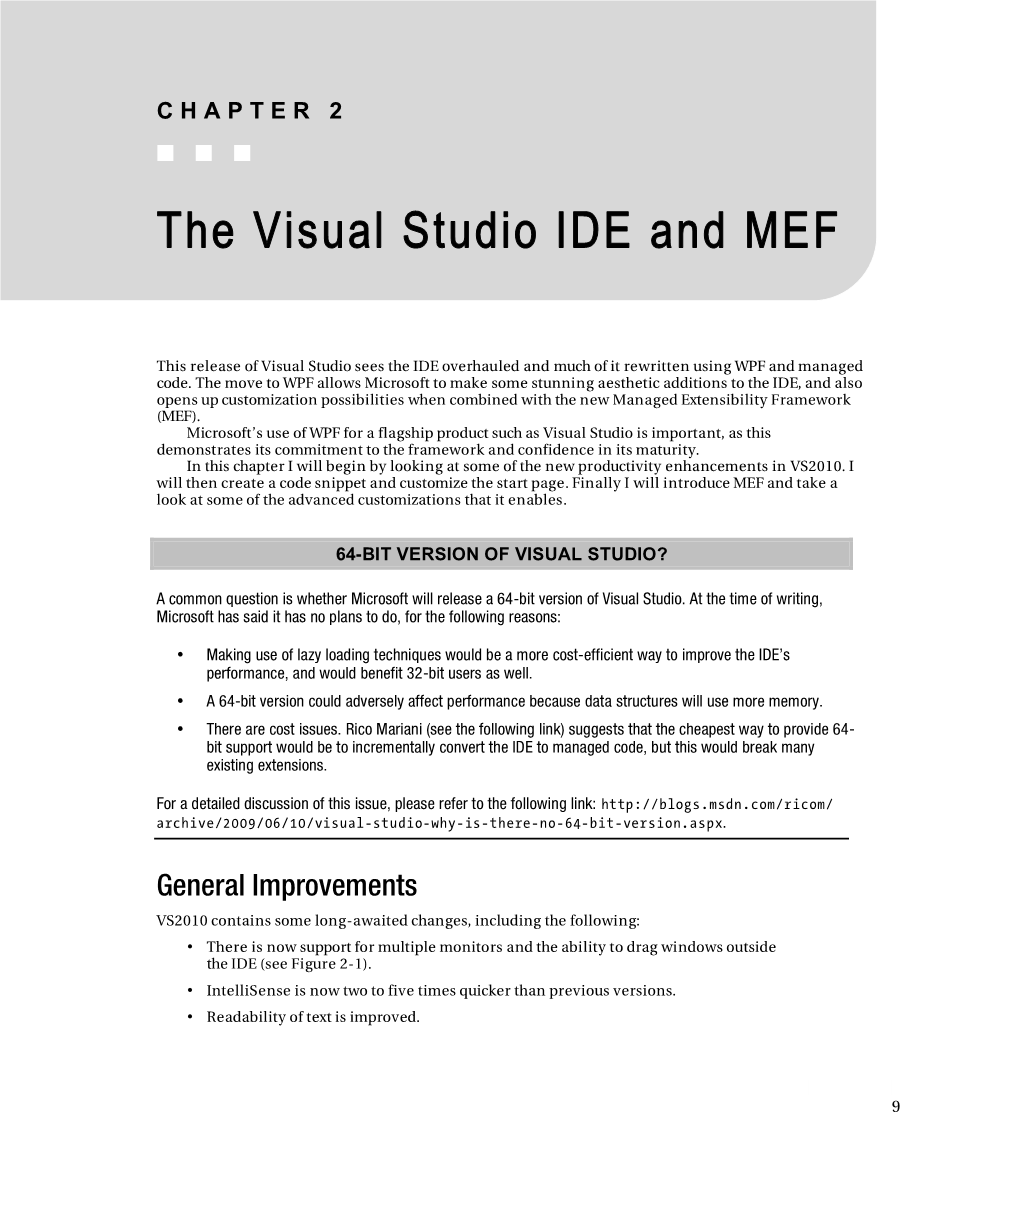 The Visual Studio IDE and MEF